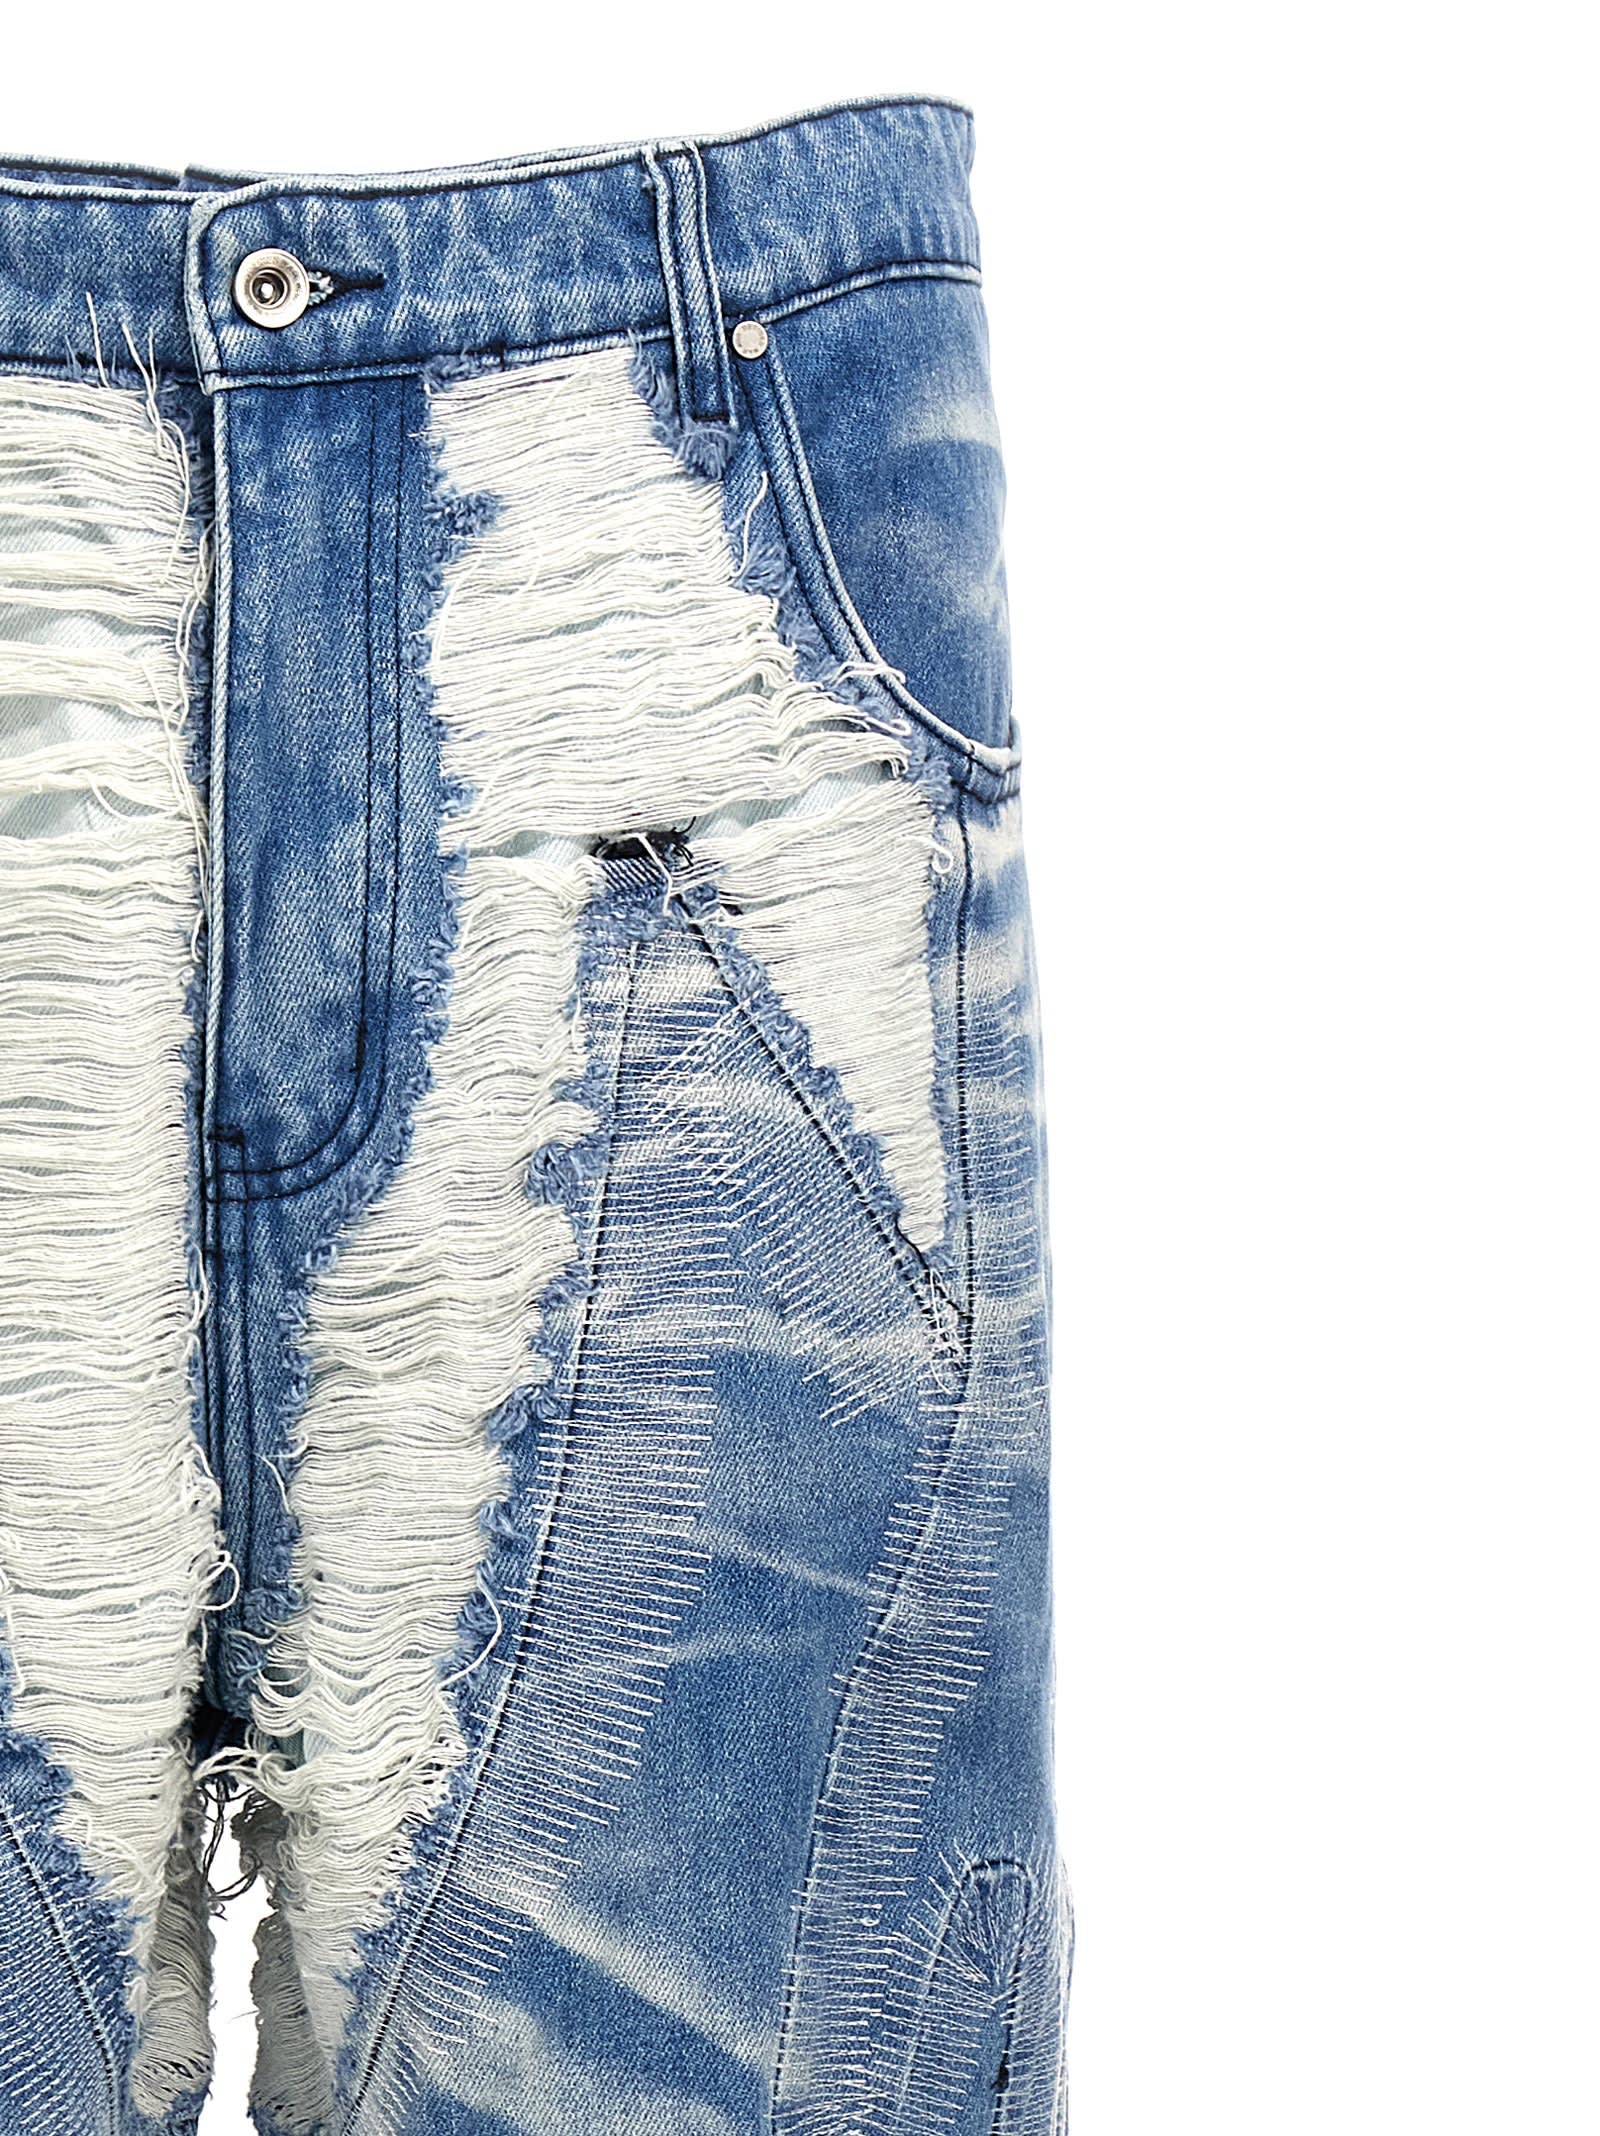 Shop Who Decides War Path Denim Jeans In Blue